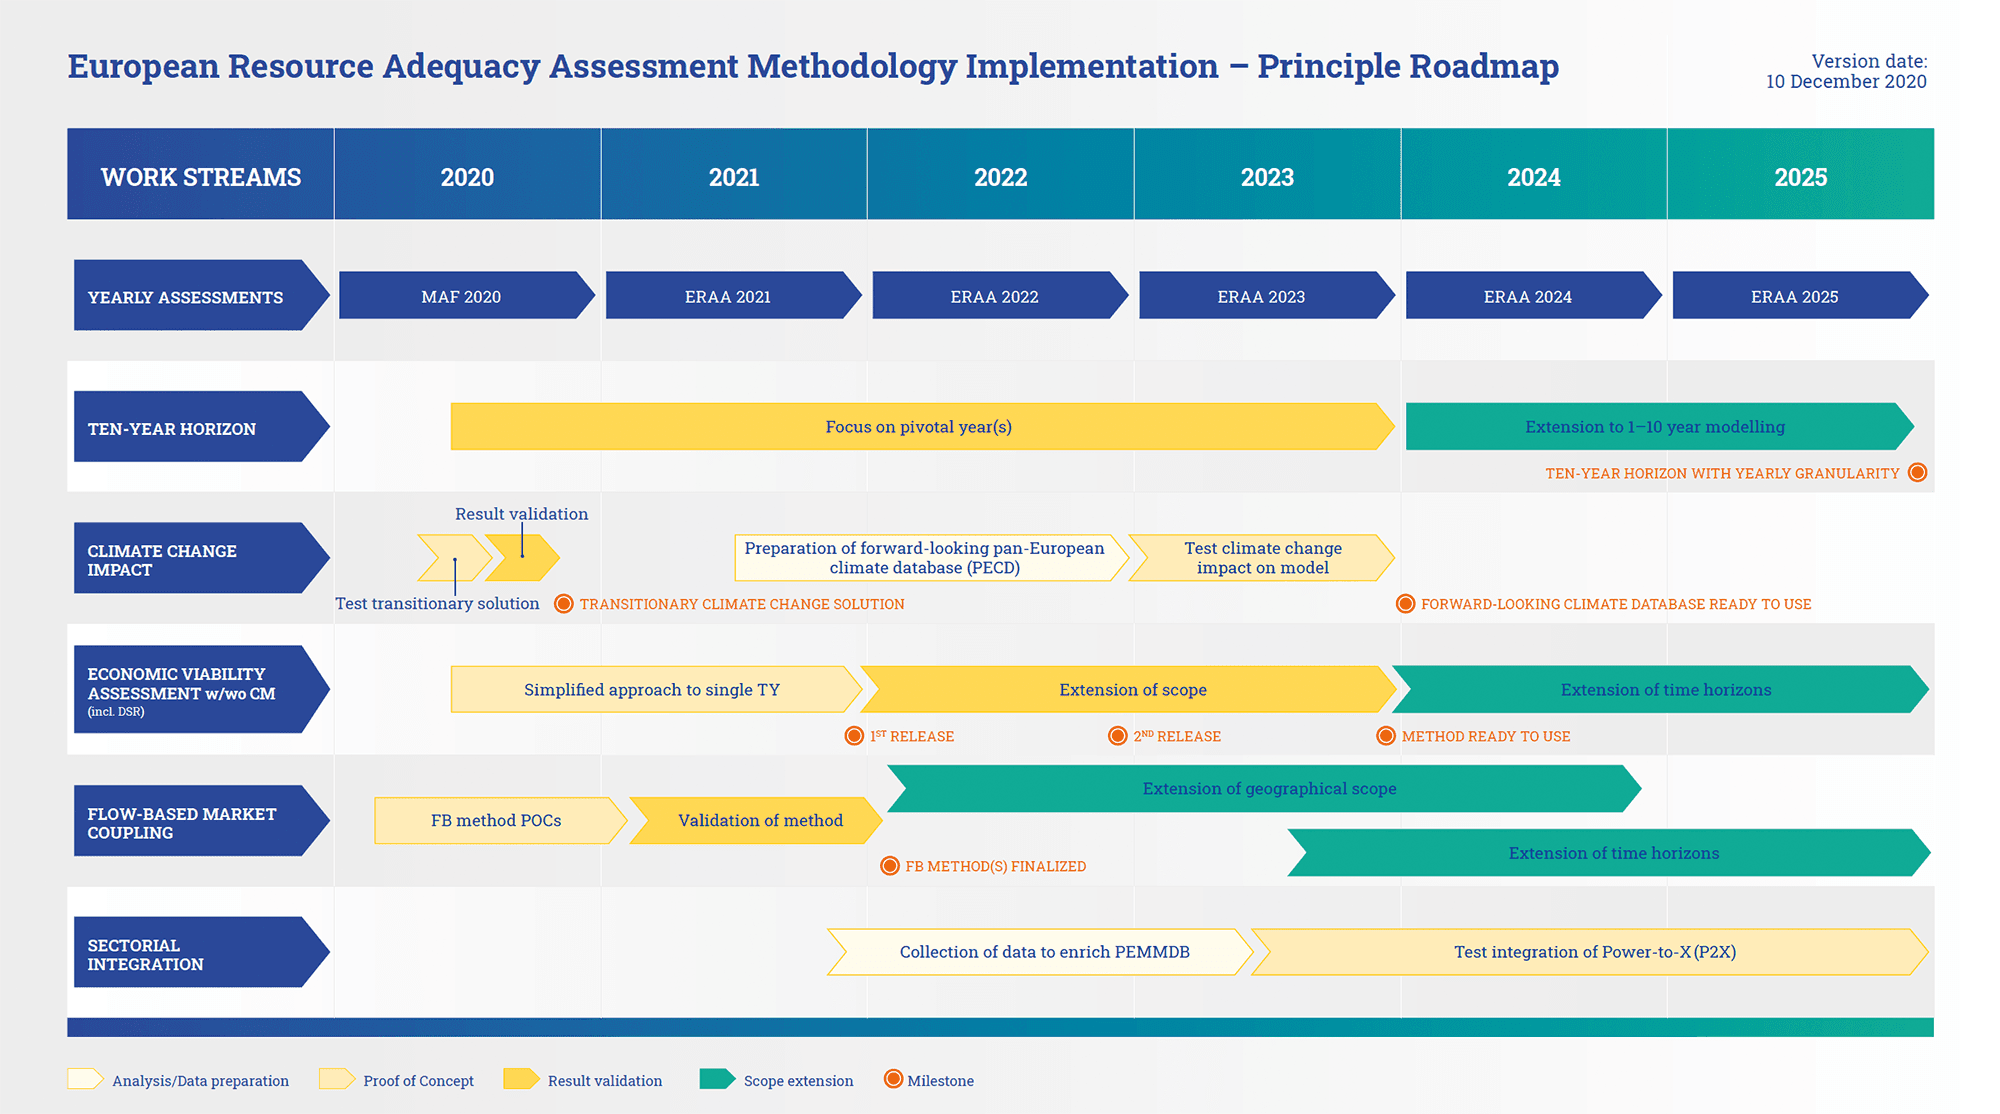 Implementation Roadmap 2021